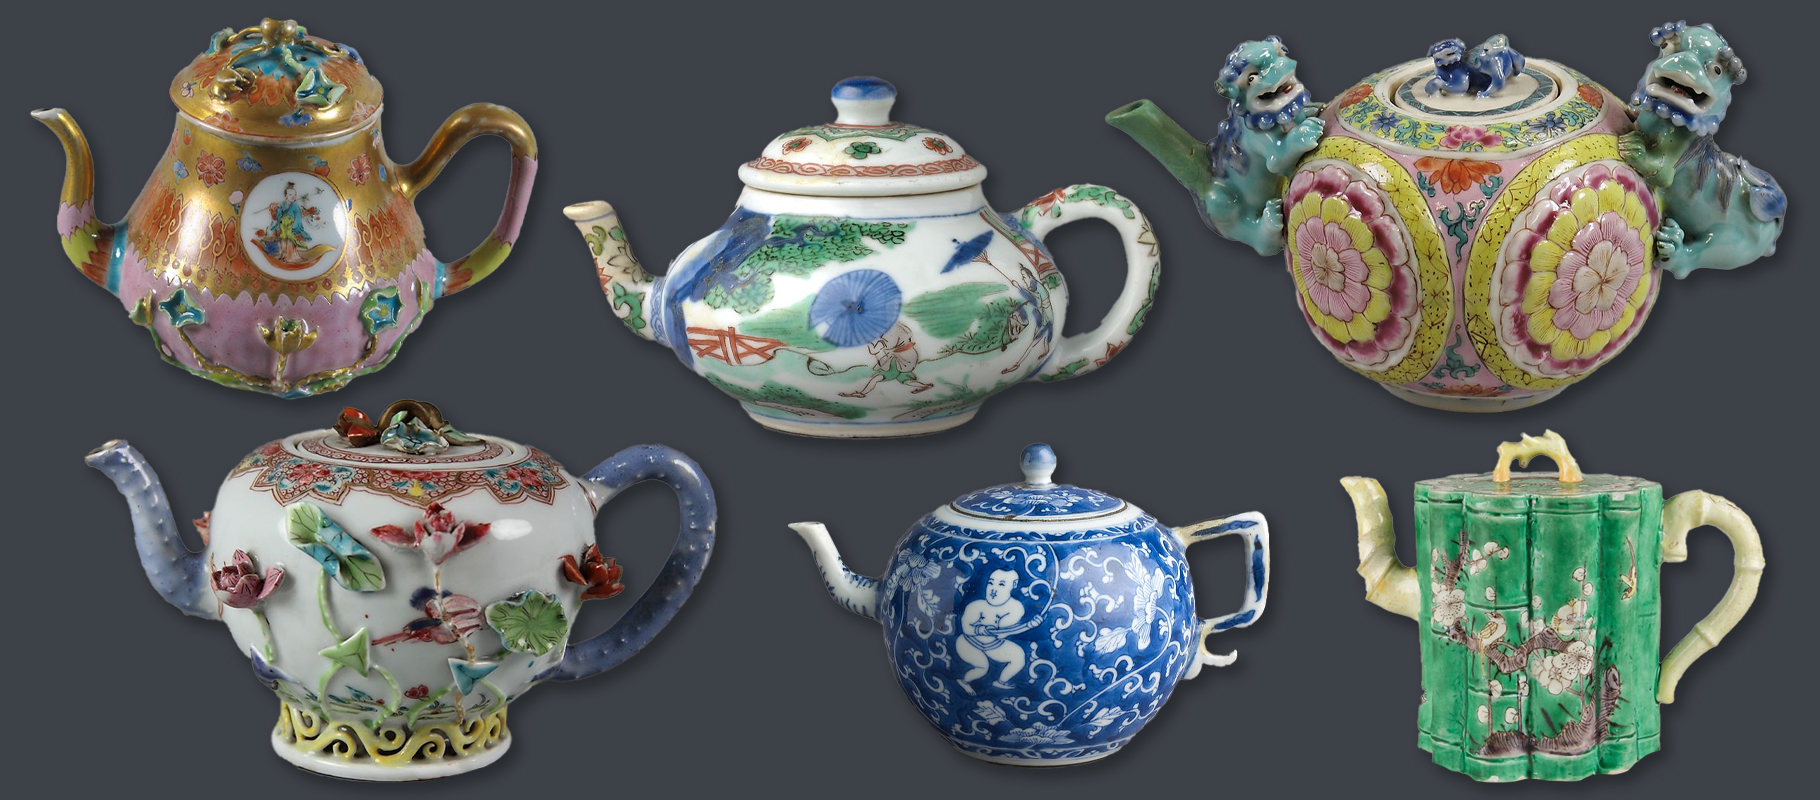 https://fineart-restoration.co.uk/wp-content/uploads/2020/10/fine-art-restoration-chinese-teapots.jpg